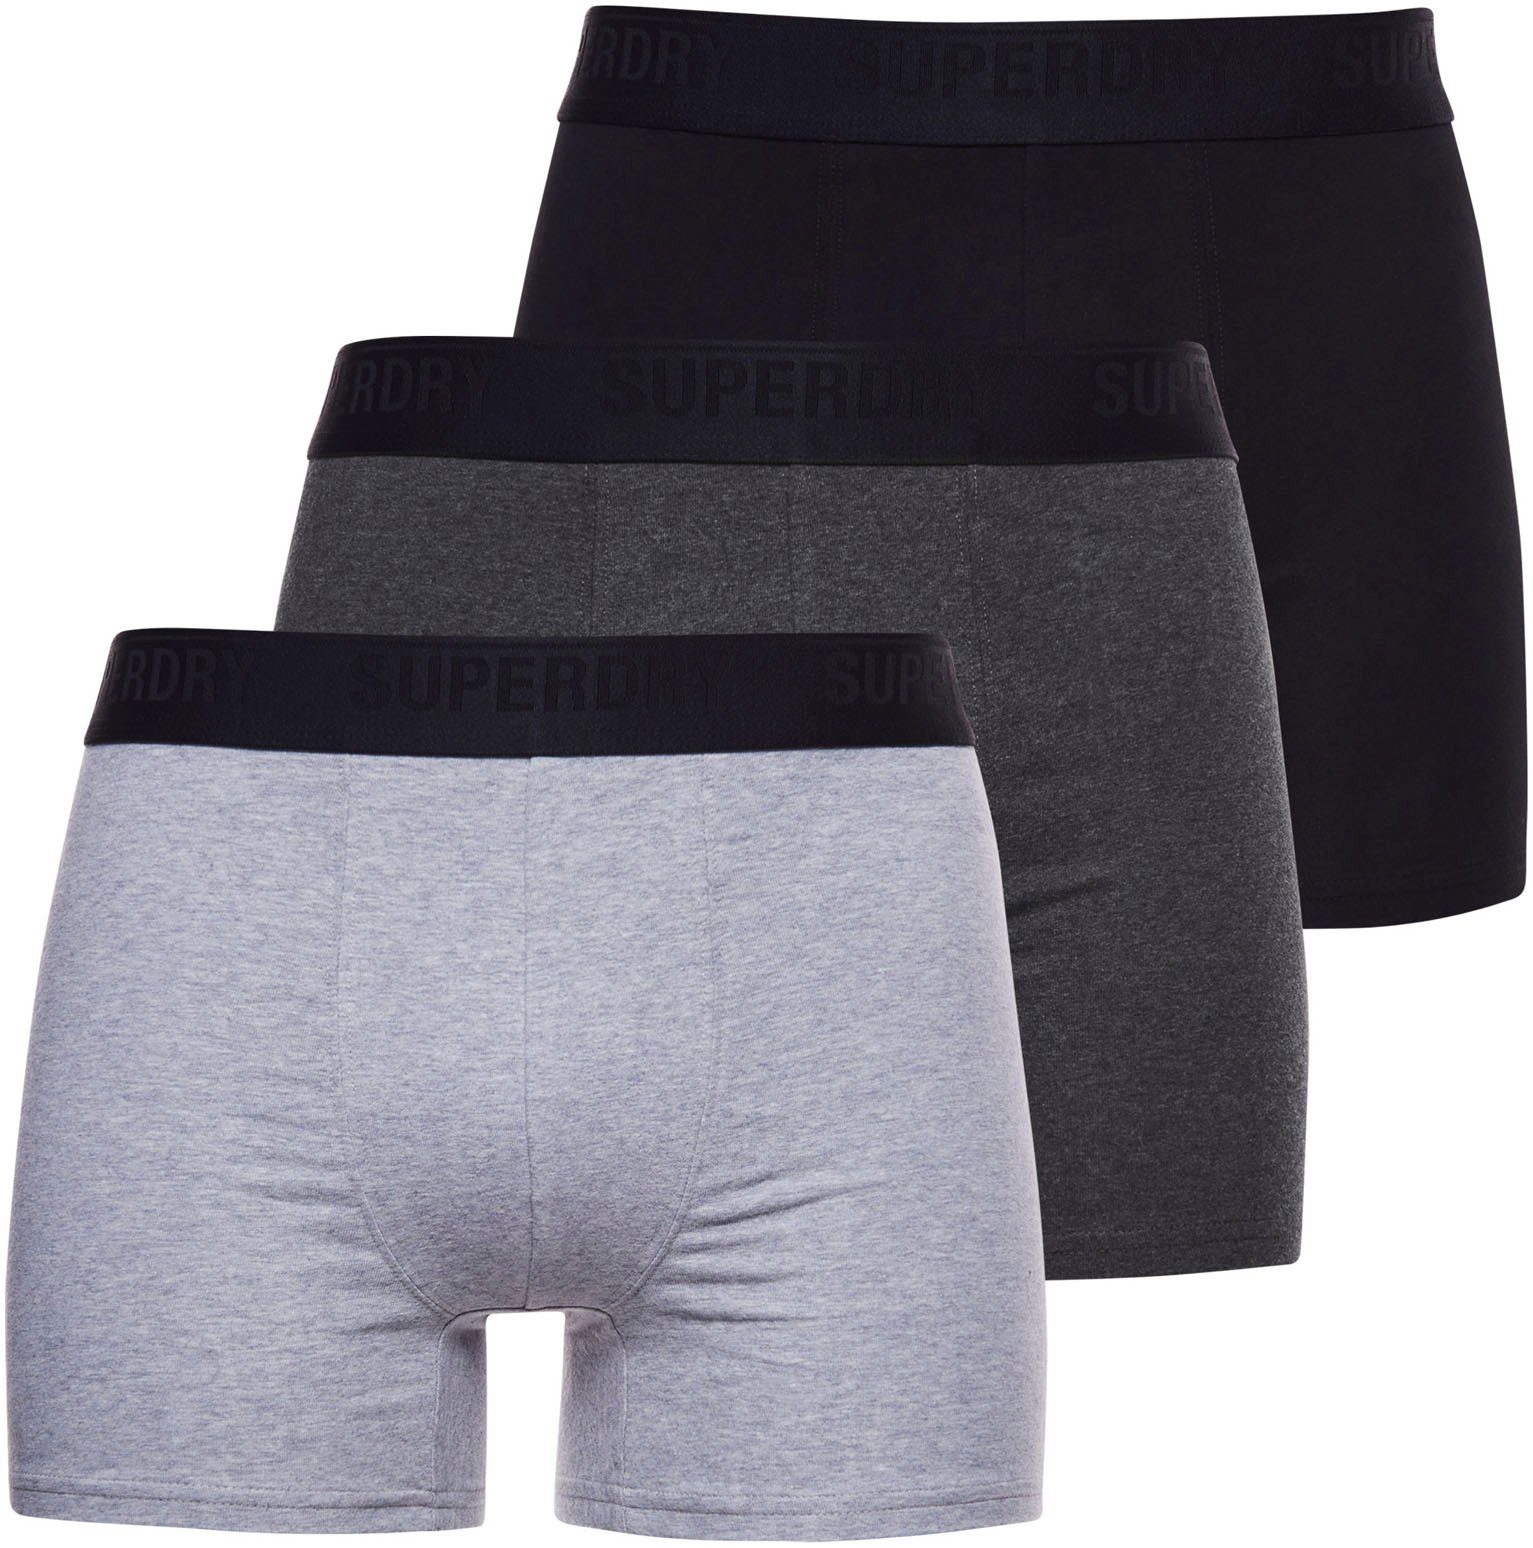 Superdry Langer Boxer SD lg web grau-meliert, 3x Boxer mit anthrazit (3-St., 3er-Pack) wb Logo schwarz, Webbund